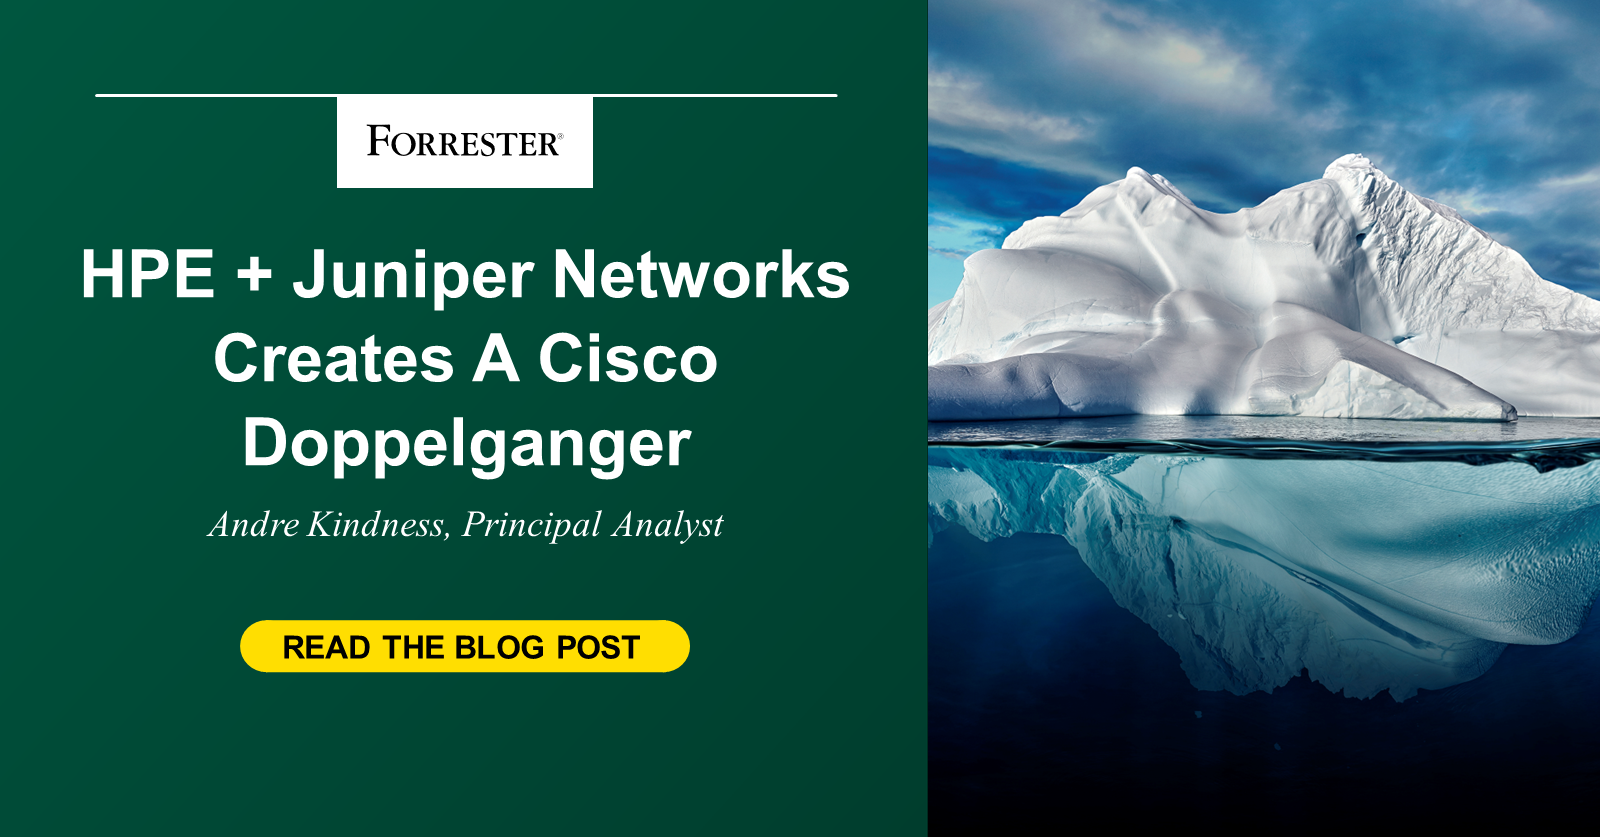 HPE + Juniper Networks Creates A Cisco Doppelganger